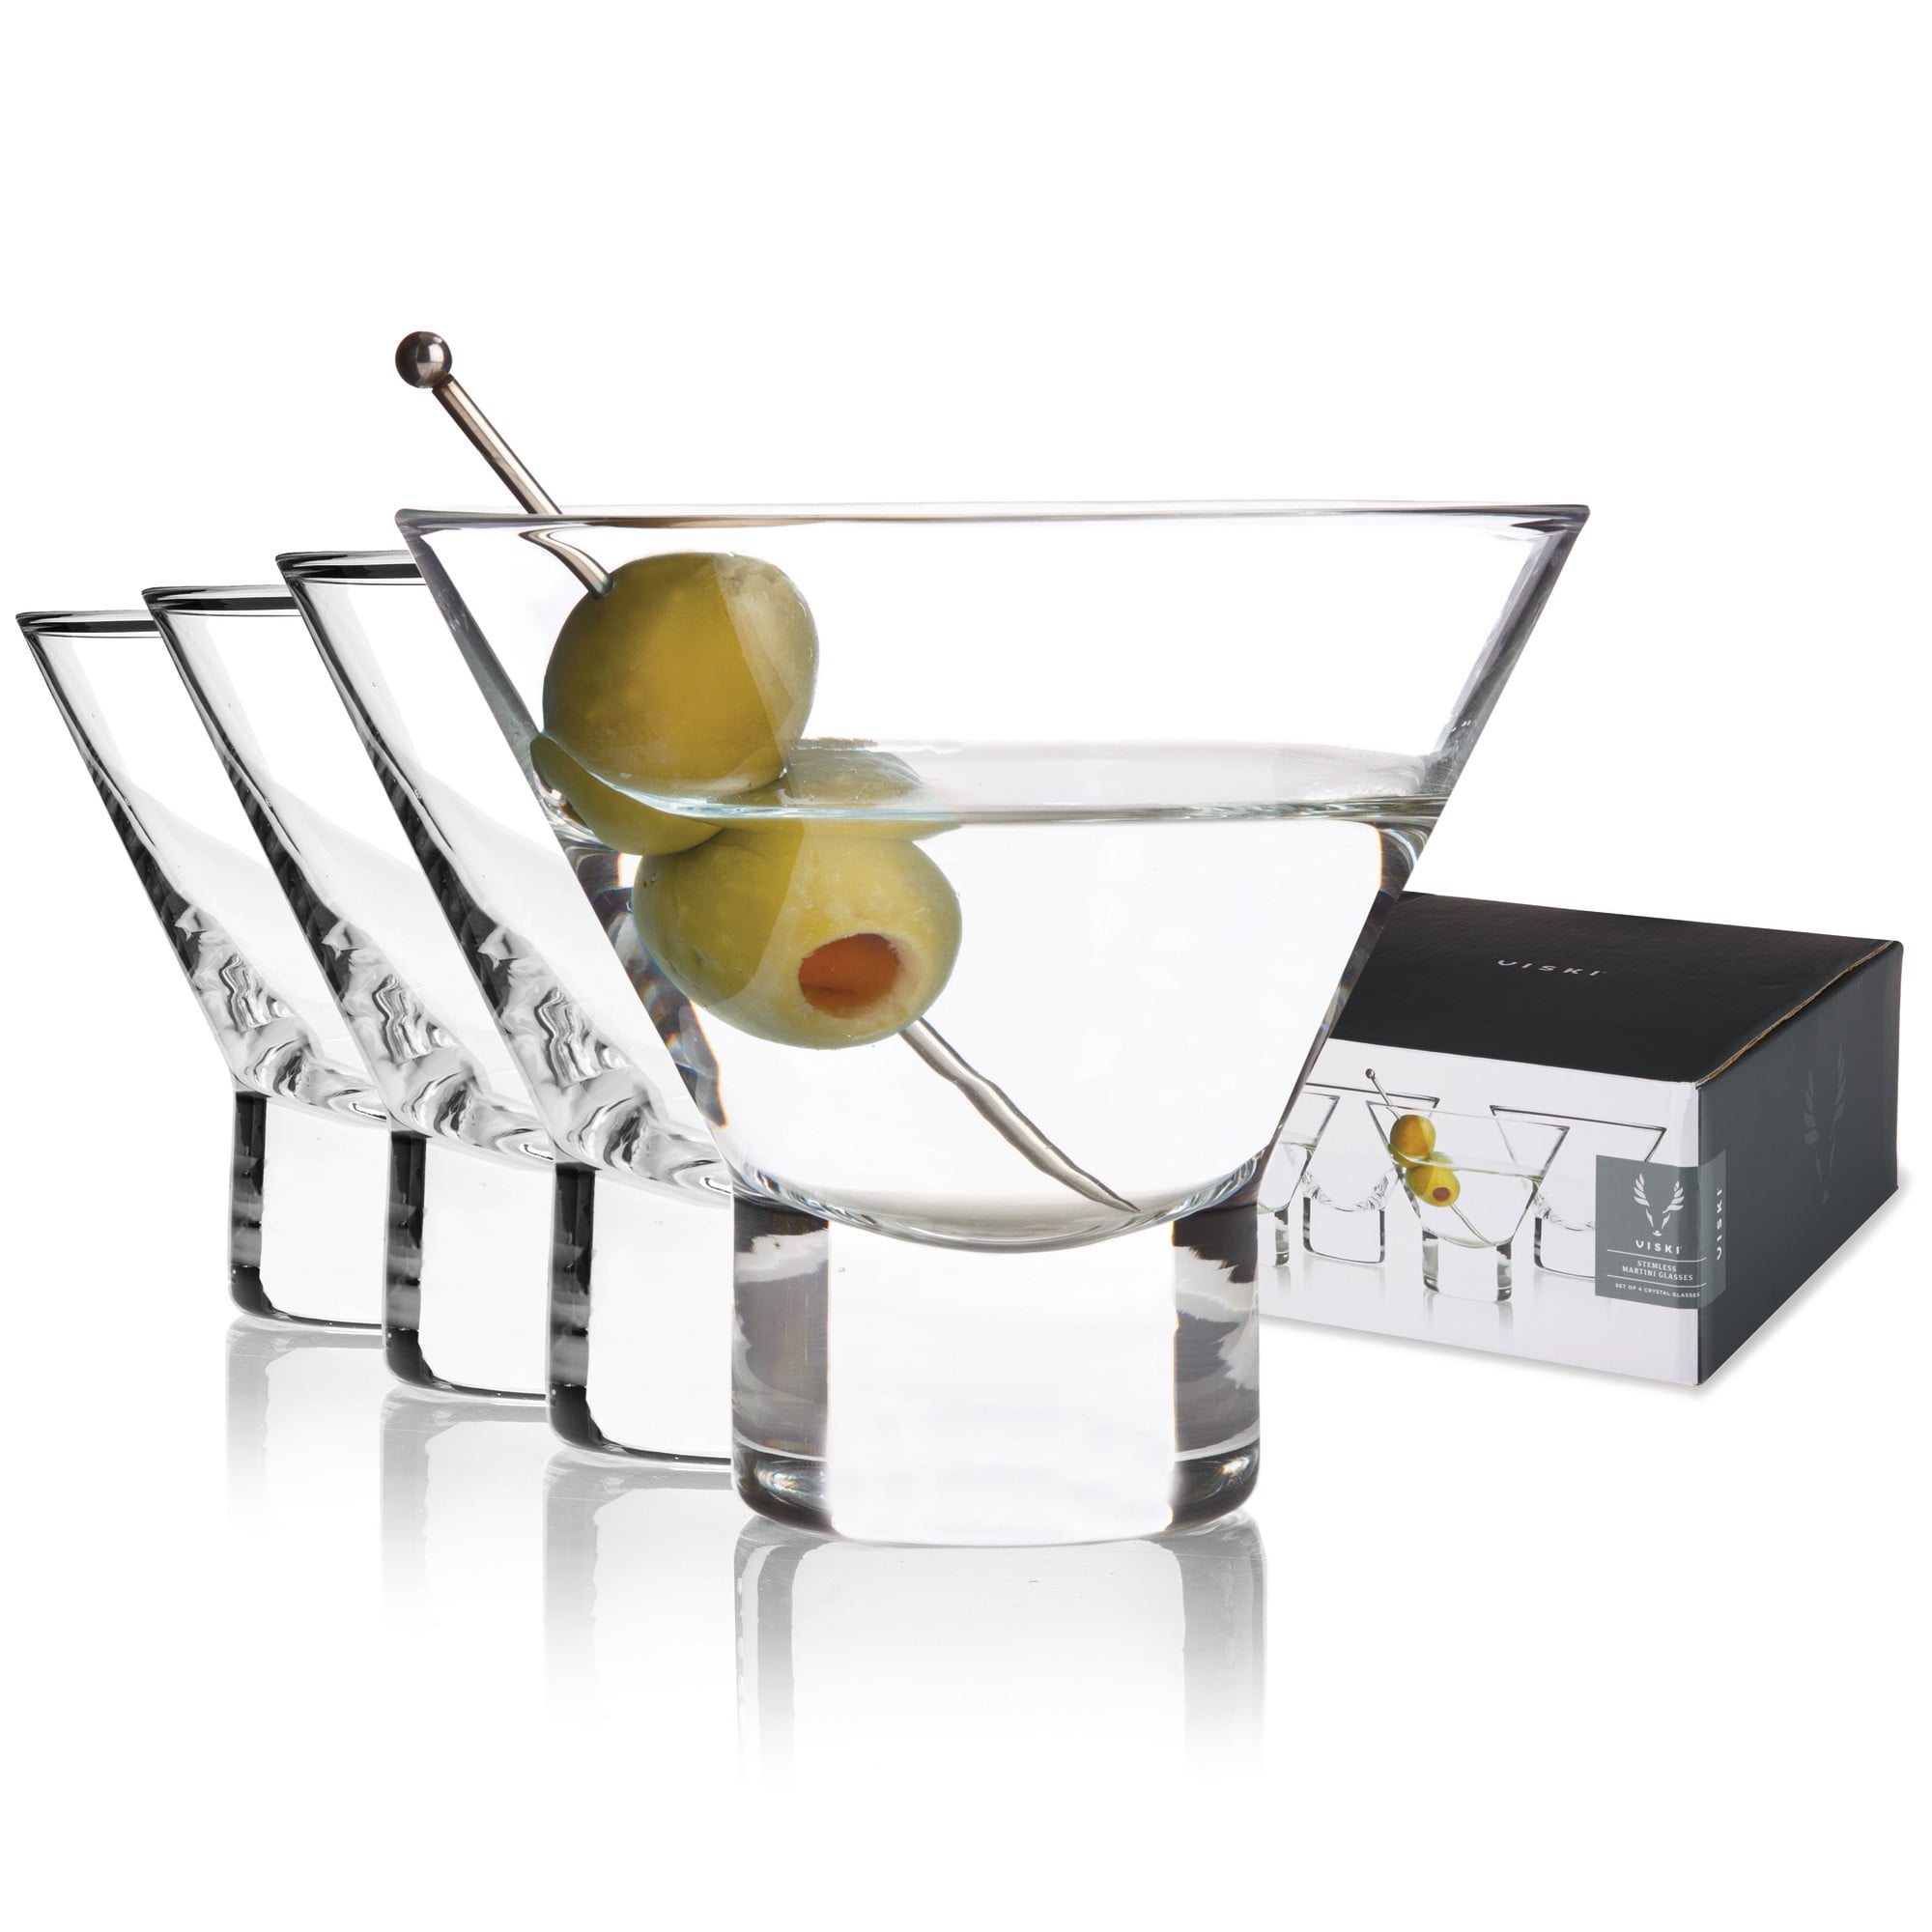 Viski Raye Angled Stemmed Crystal Coupe Cocktail Glasses, Champagne Coupe  Glasses, Drinkware Set, Espresso Martini Glasses, Set of 2, 7oz